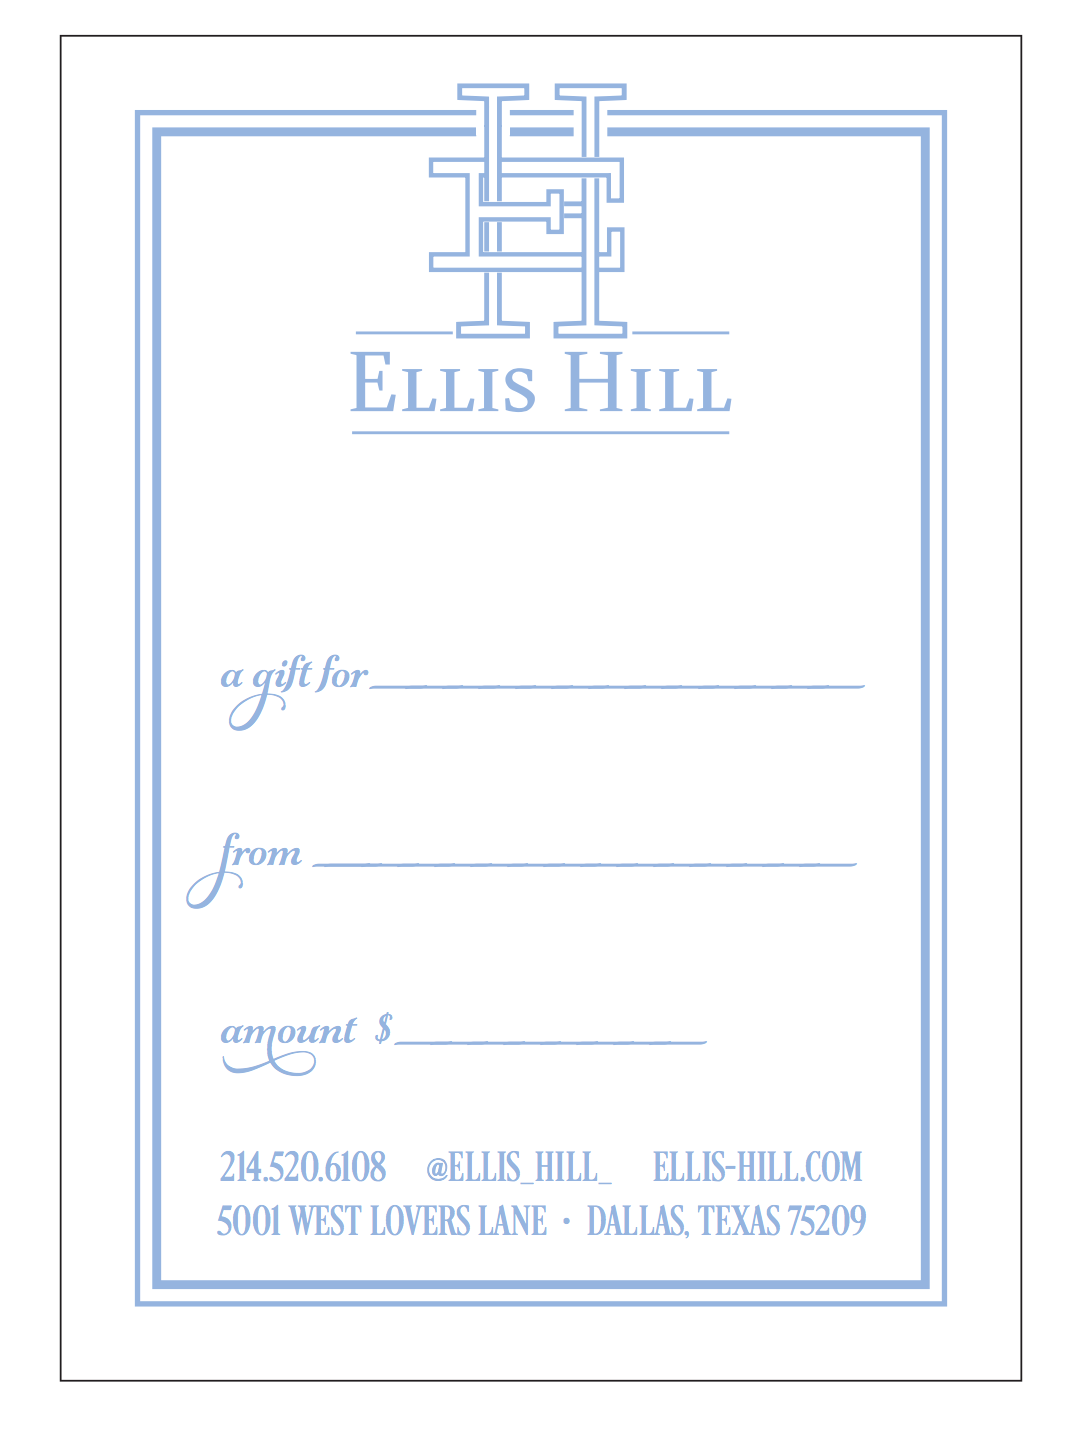 Ellis Hill Gift Card